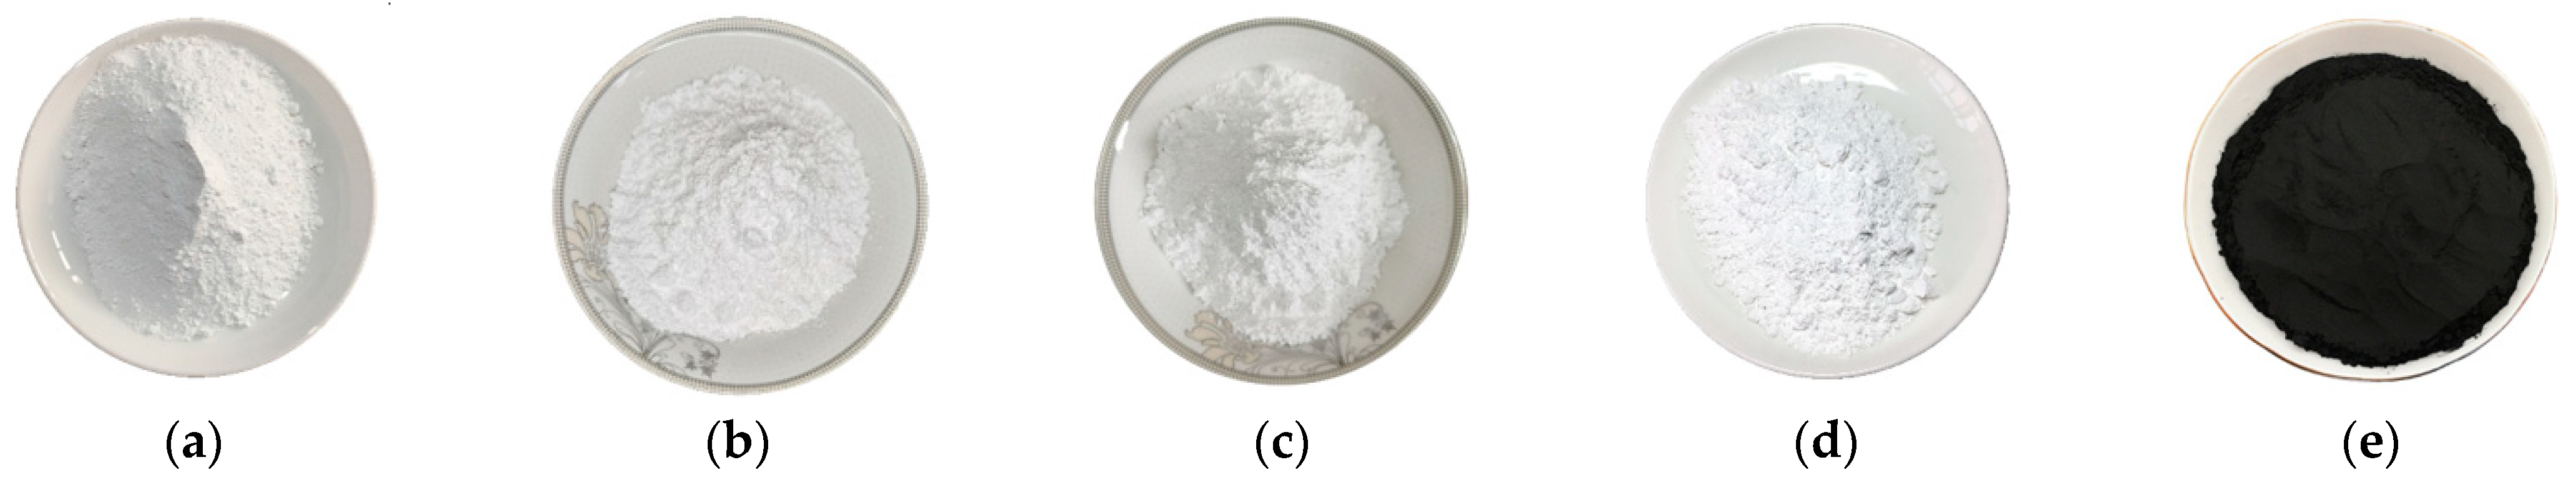 Kryolan Translucent Powder TL3 